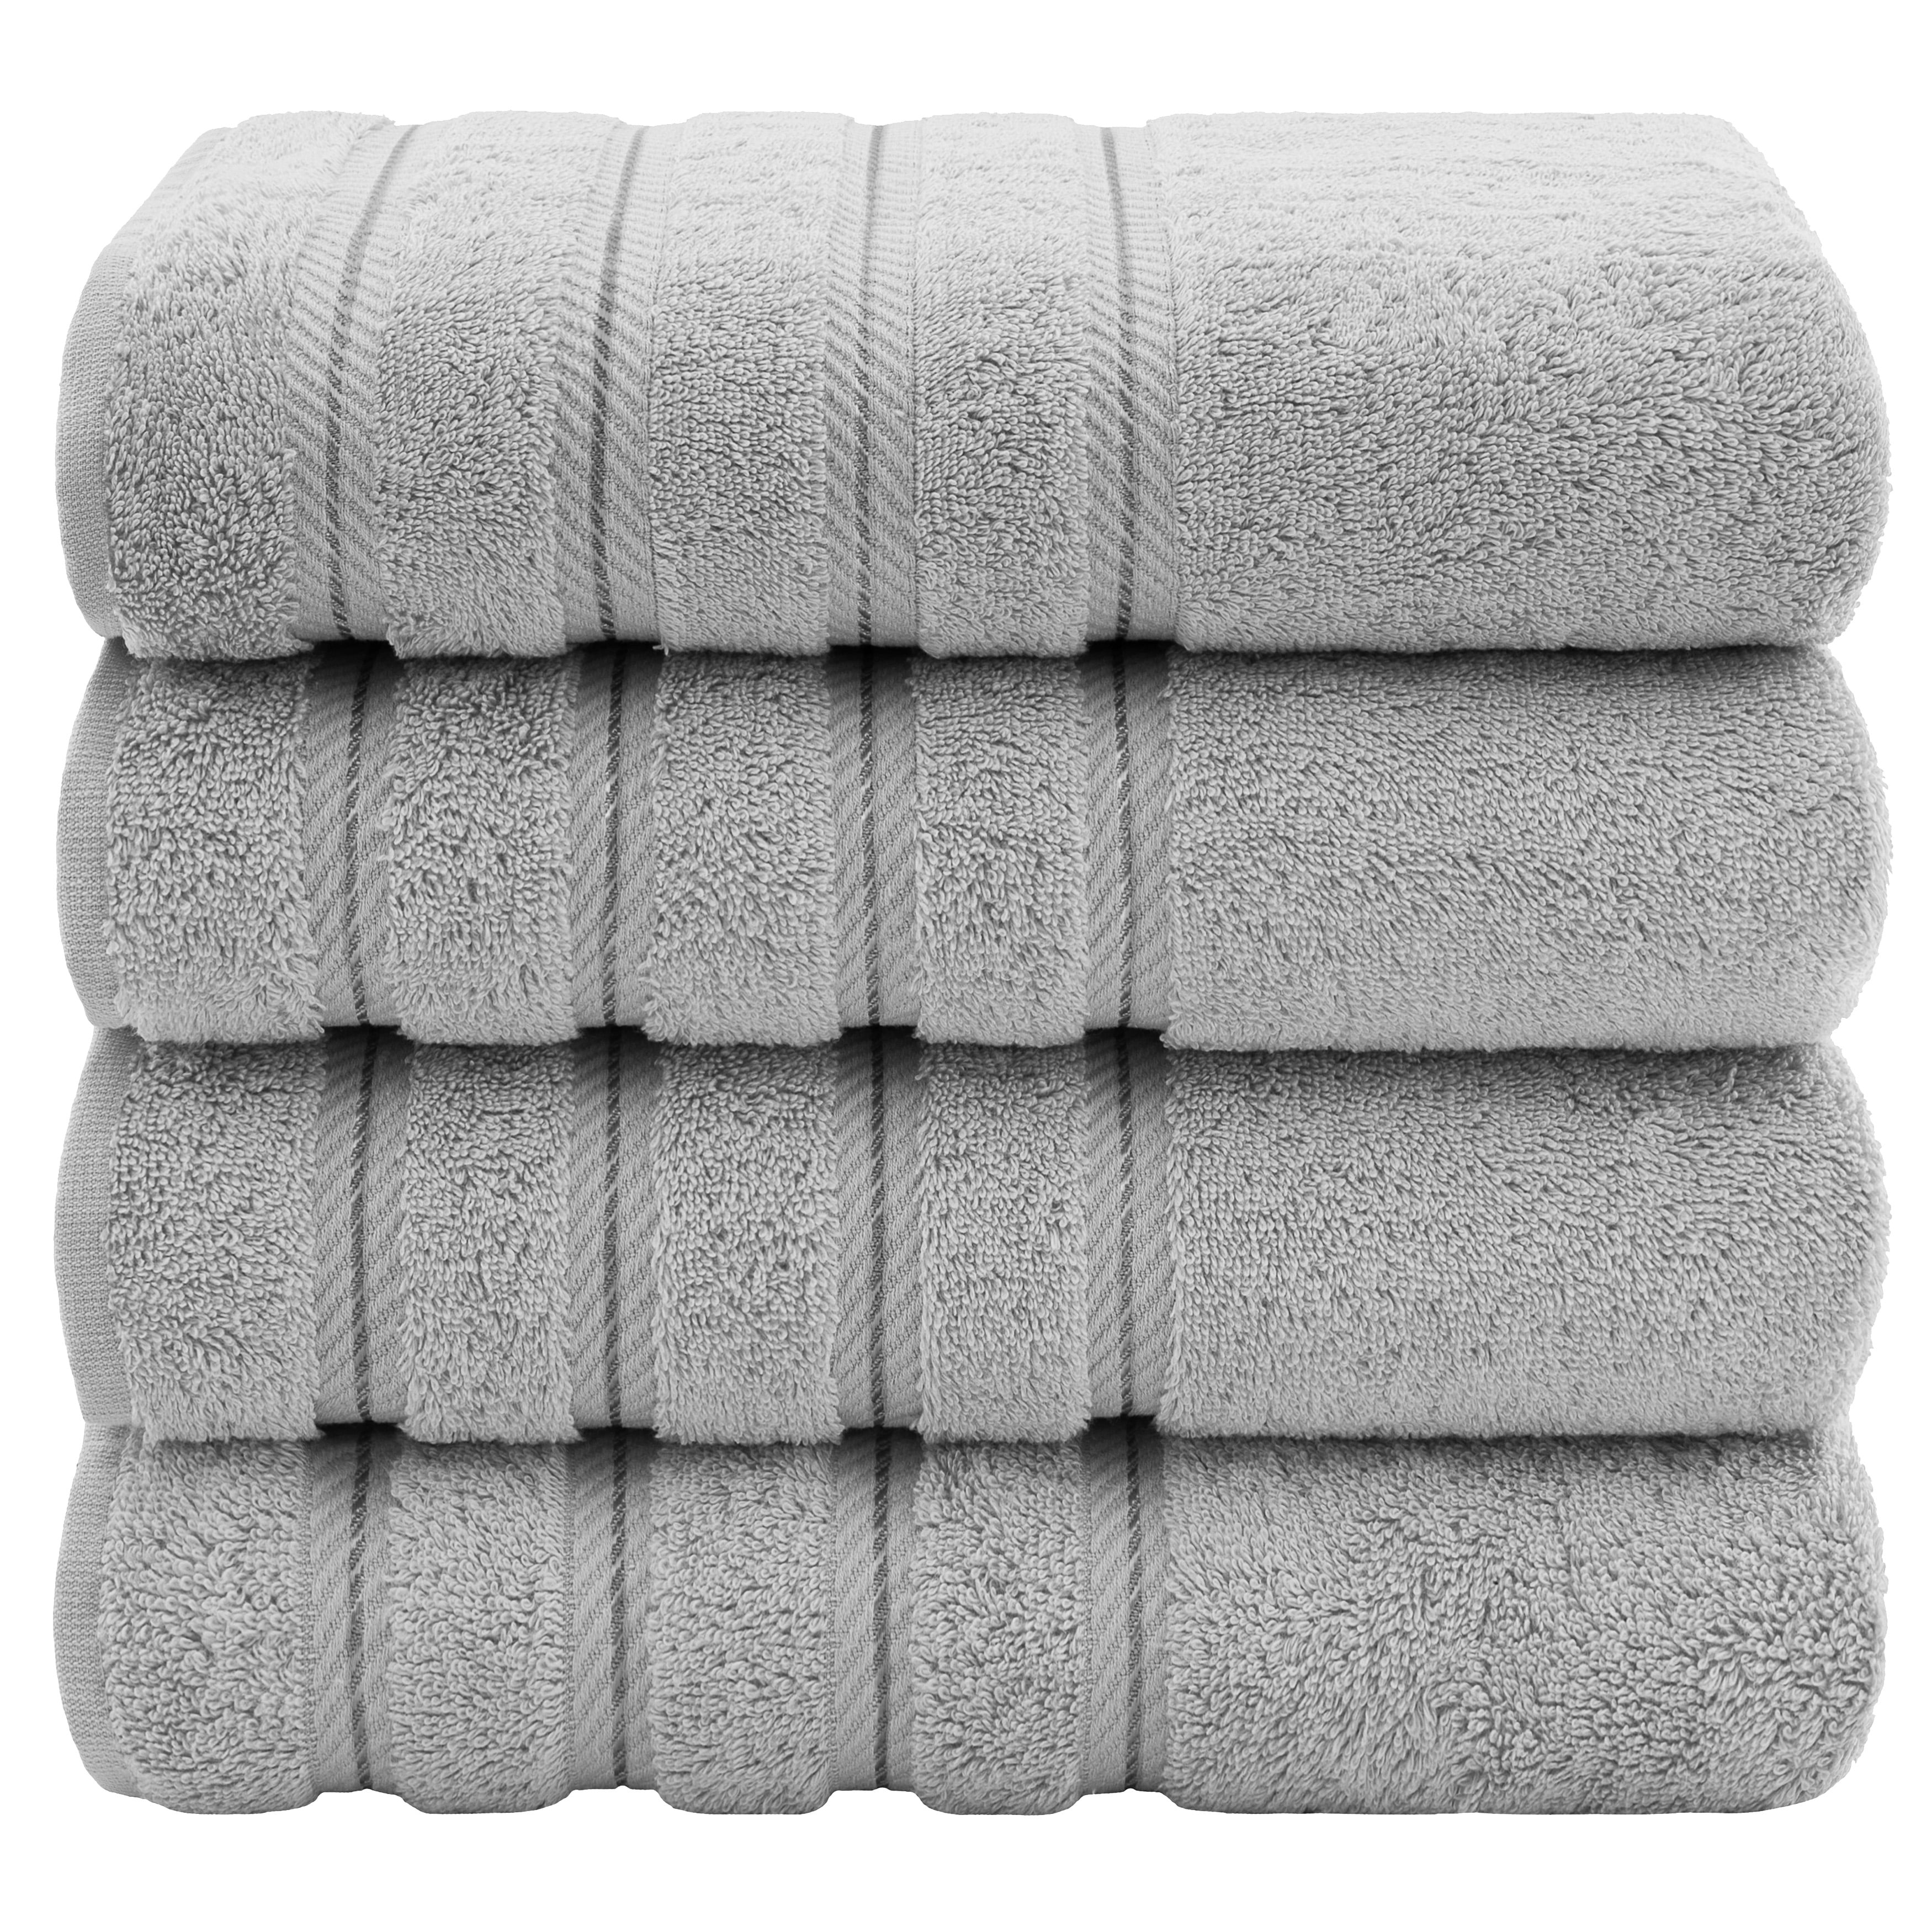 LANE LINEN Bath Sheets Bathroom Towel Set of 4, 100% Cotton Bath Sheet  Towels for Adult, Ultra Soft & Highly Absorbent Grey Large Bath Towels,  Shower